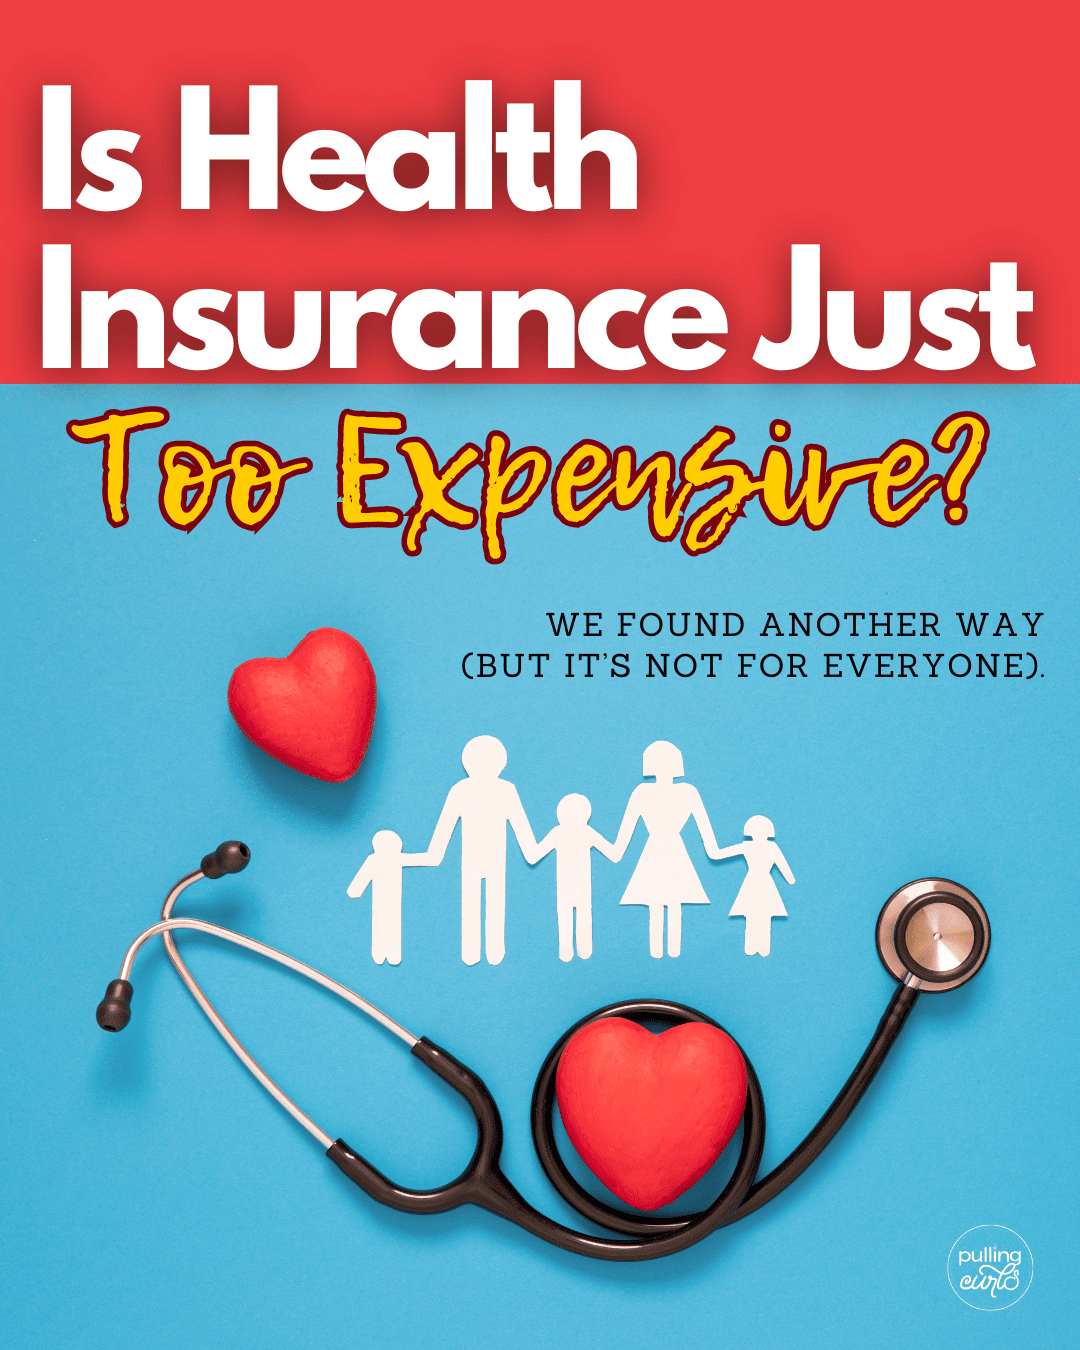 Is health insurance just to epxnesive? via @pullingcurls